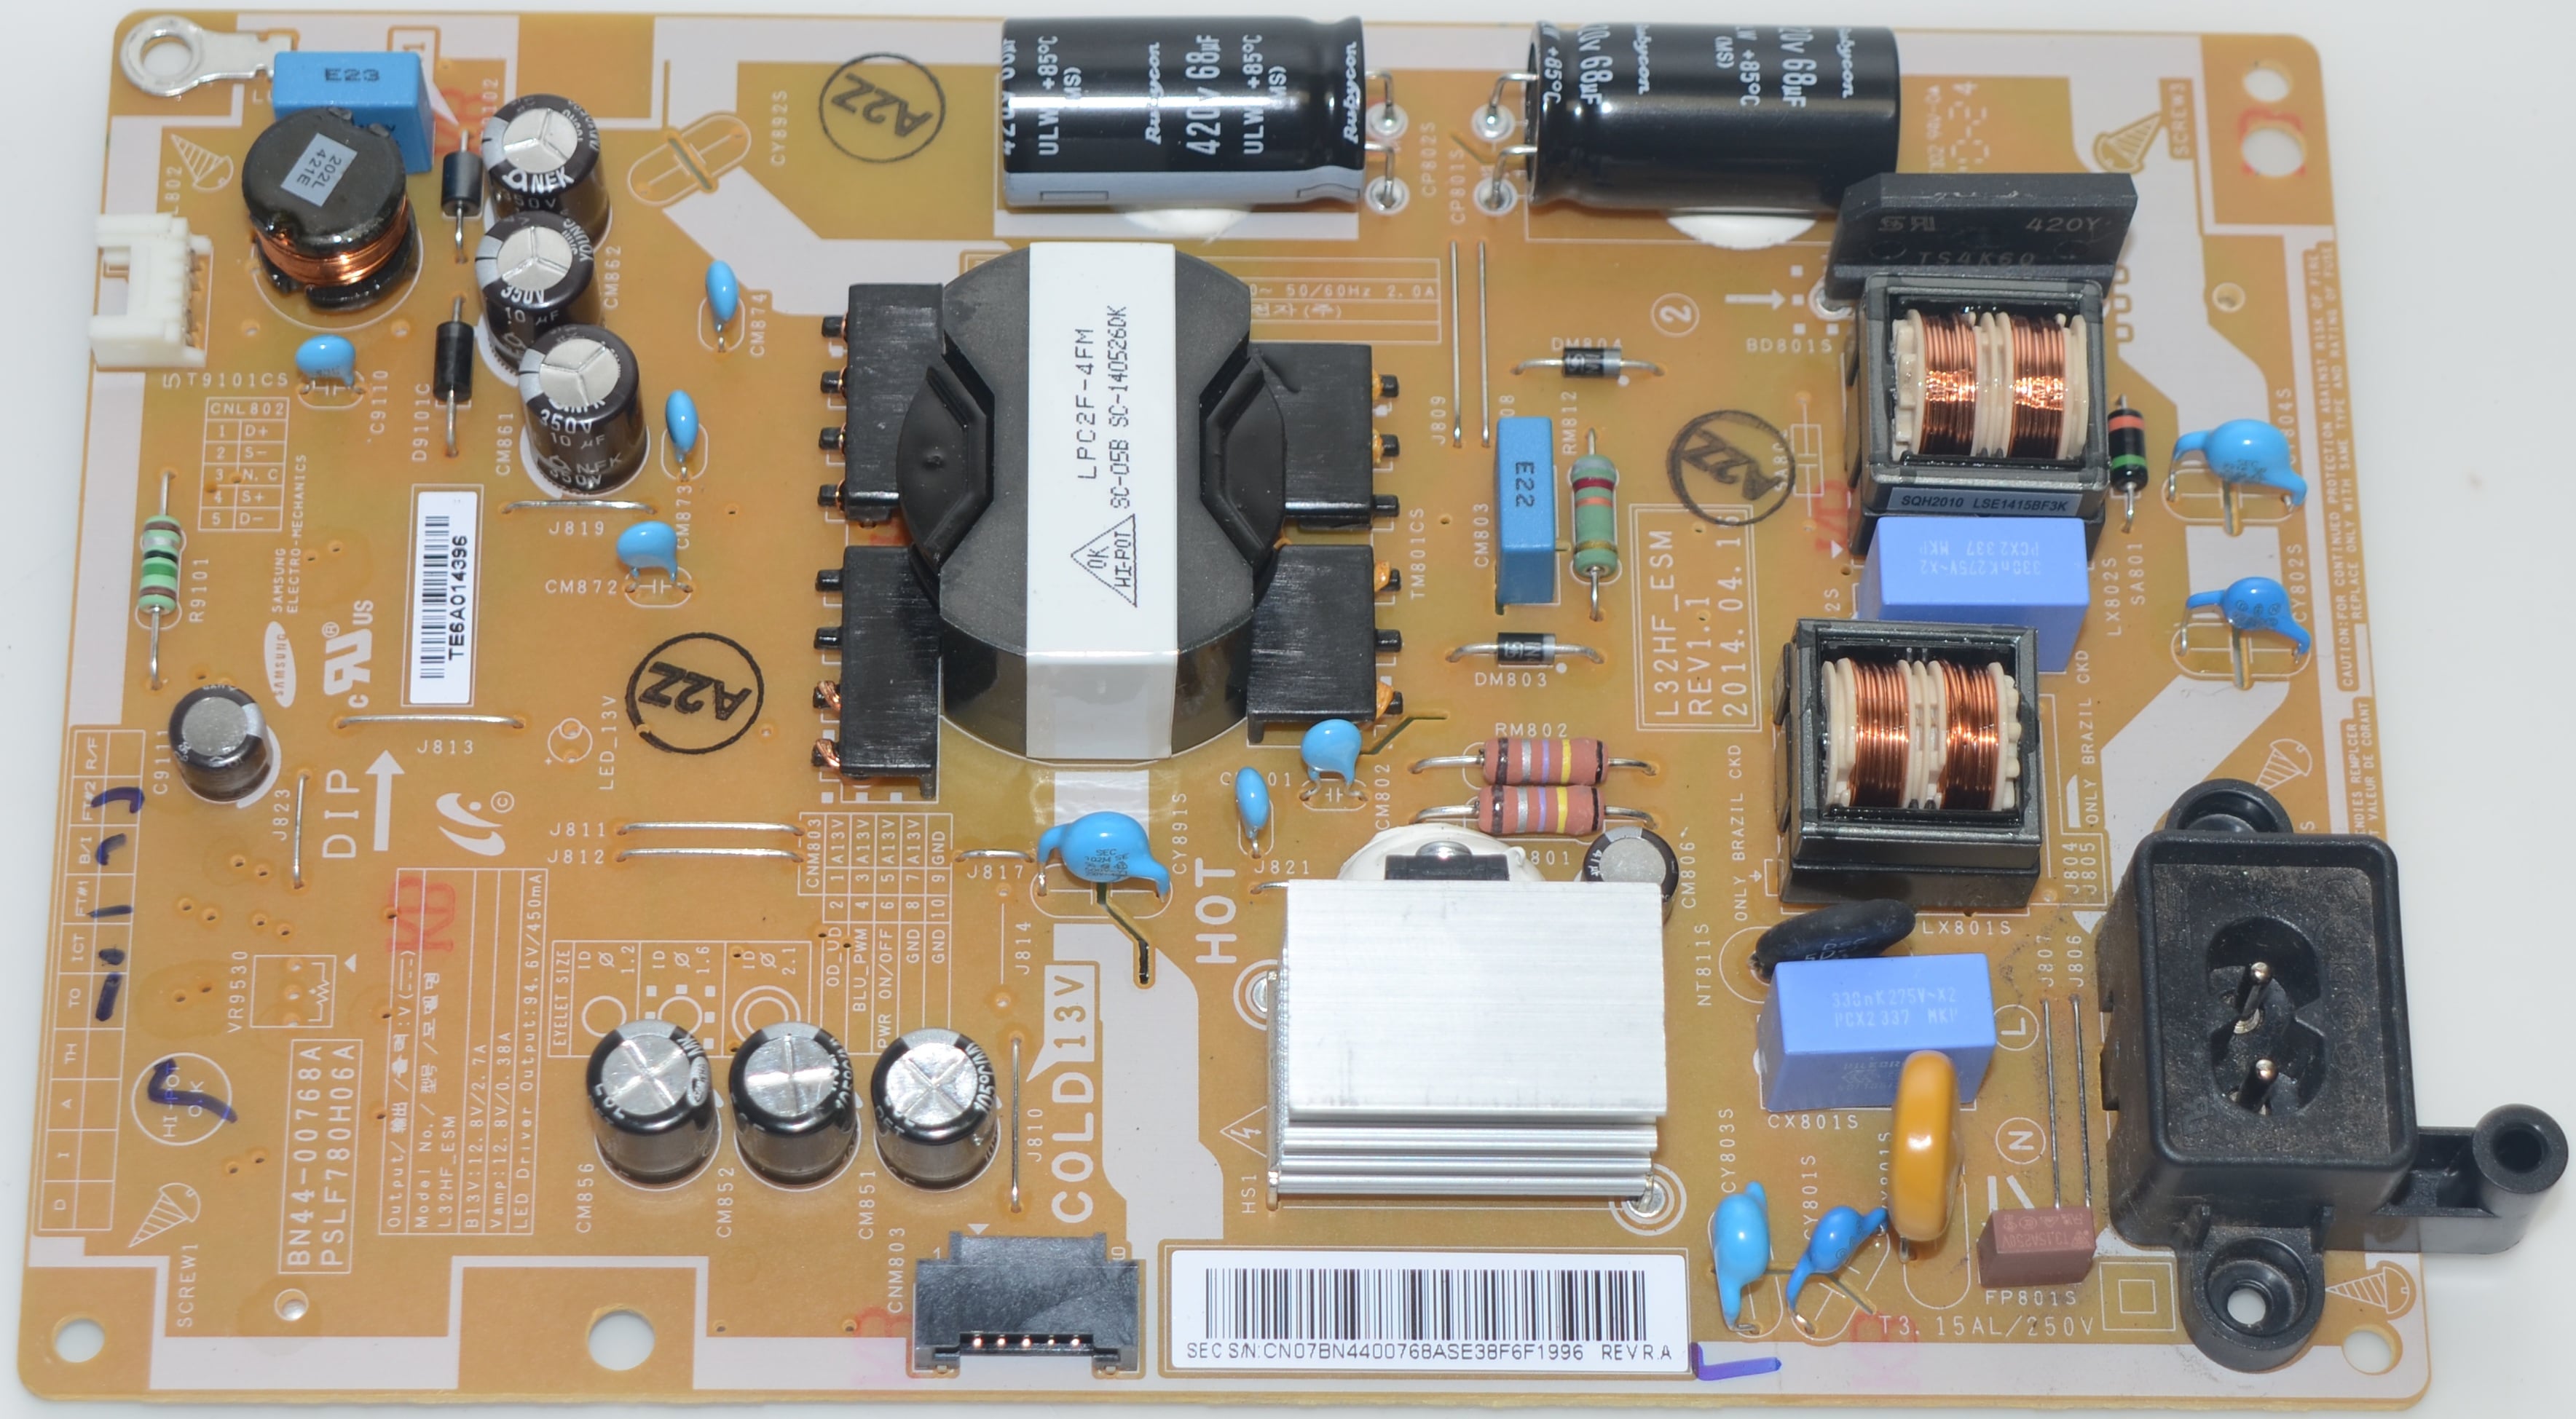 Samsung BN44-00768A Power Supply Board PSLF780H06A